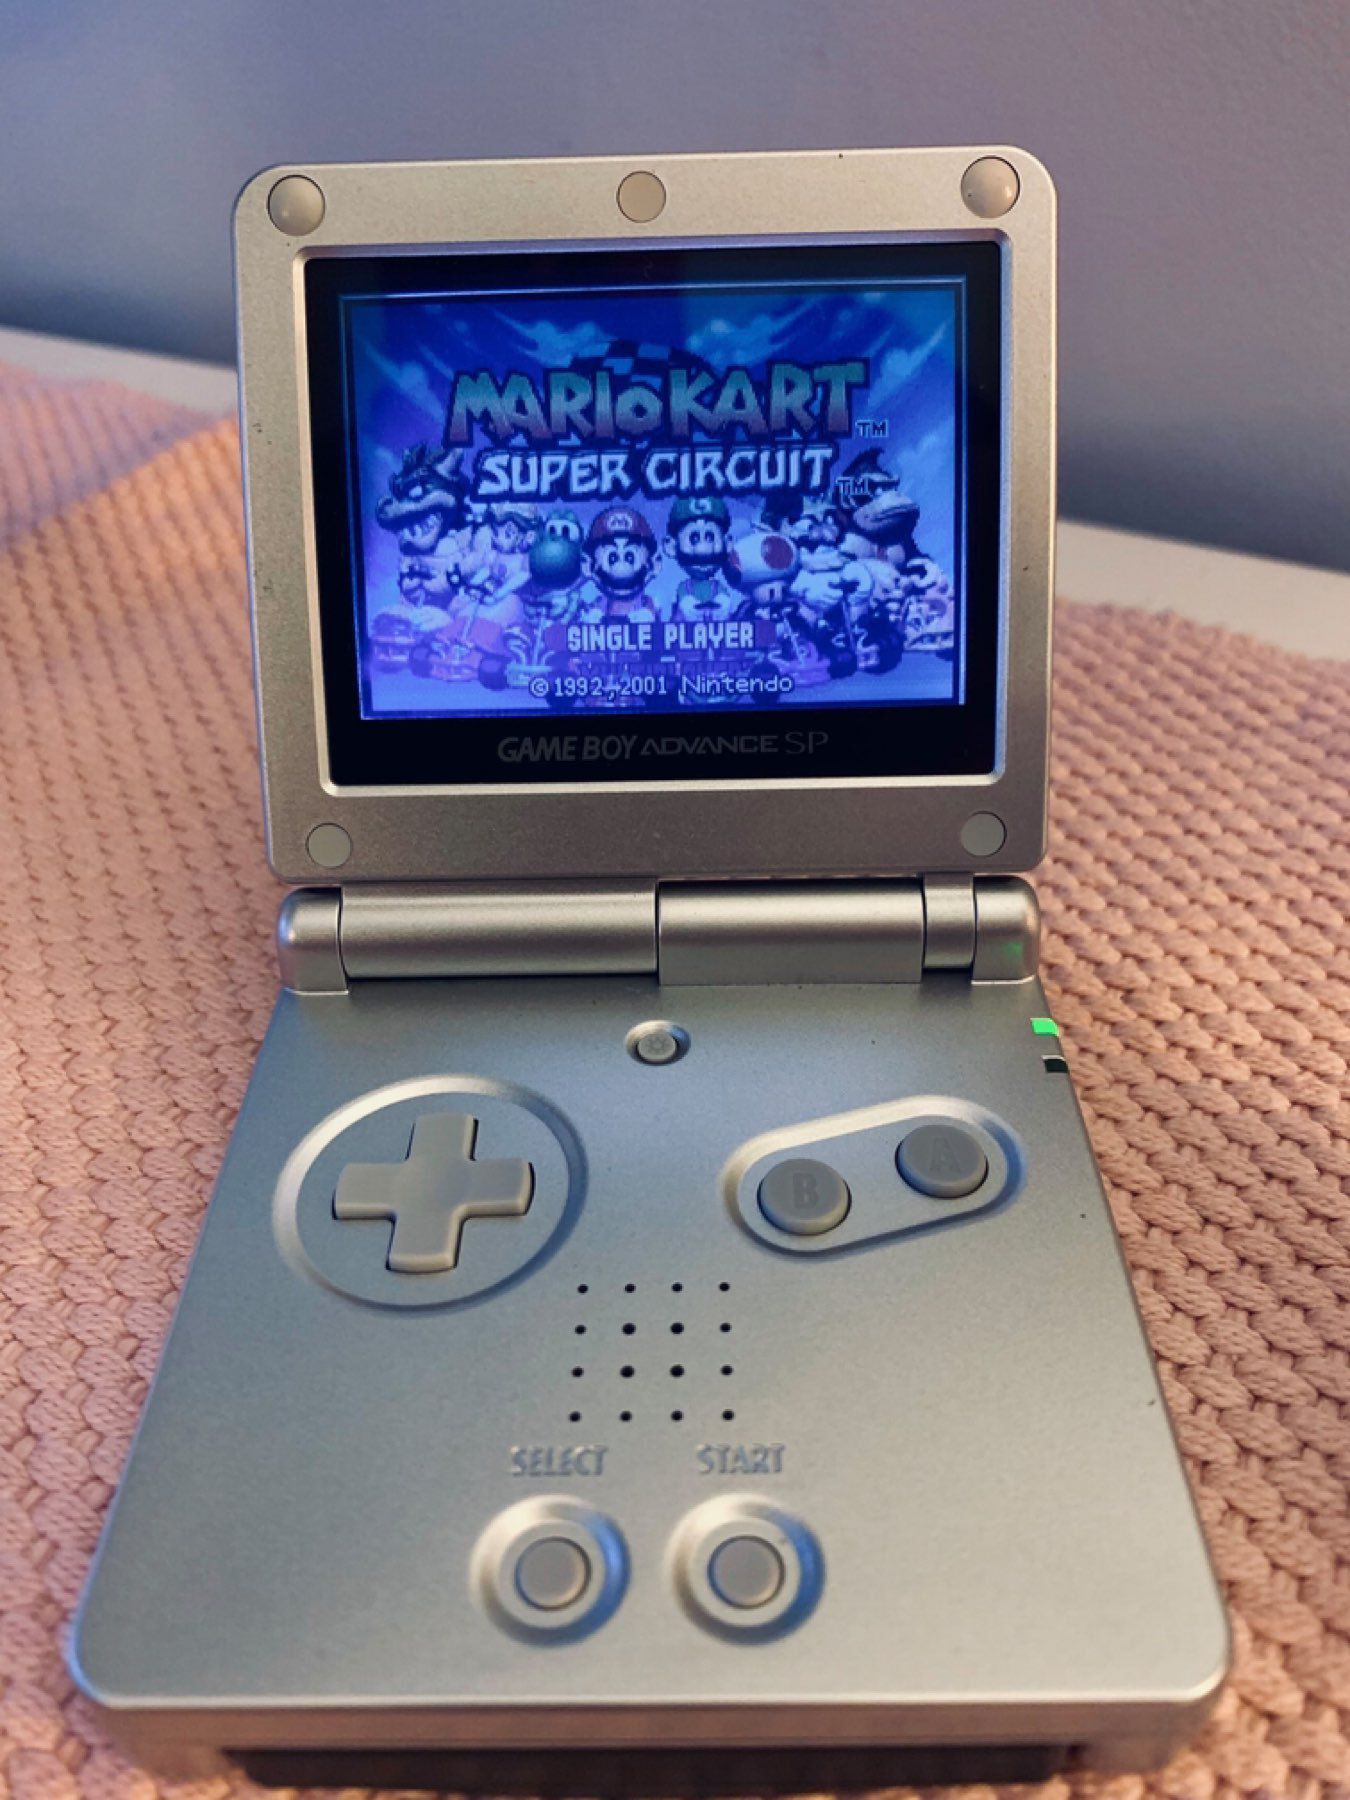 Nintendo Gameboy Advance SP. Mario Kart Super Circuit on screen.